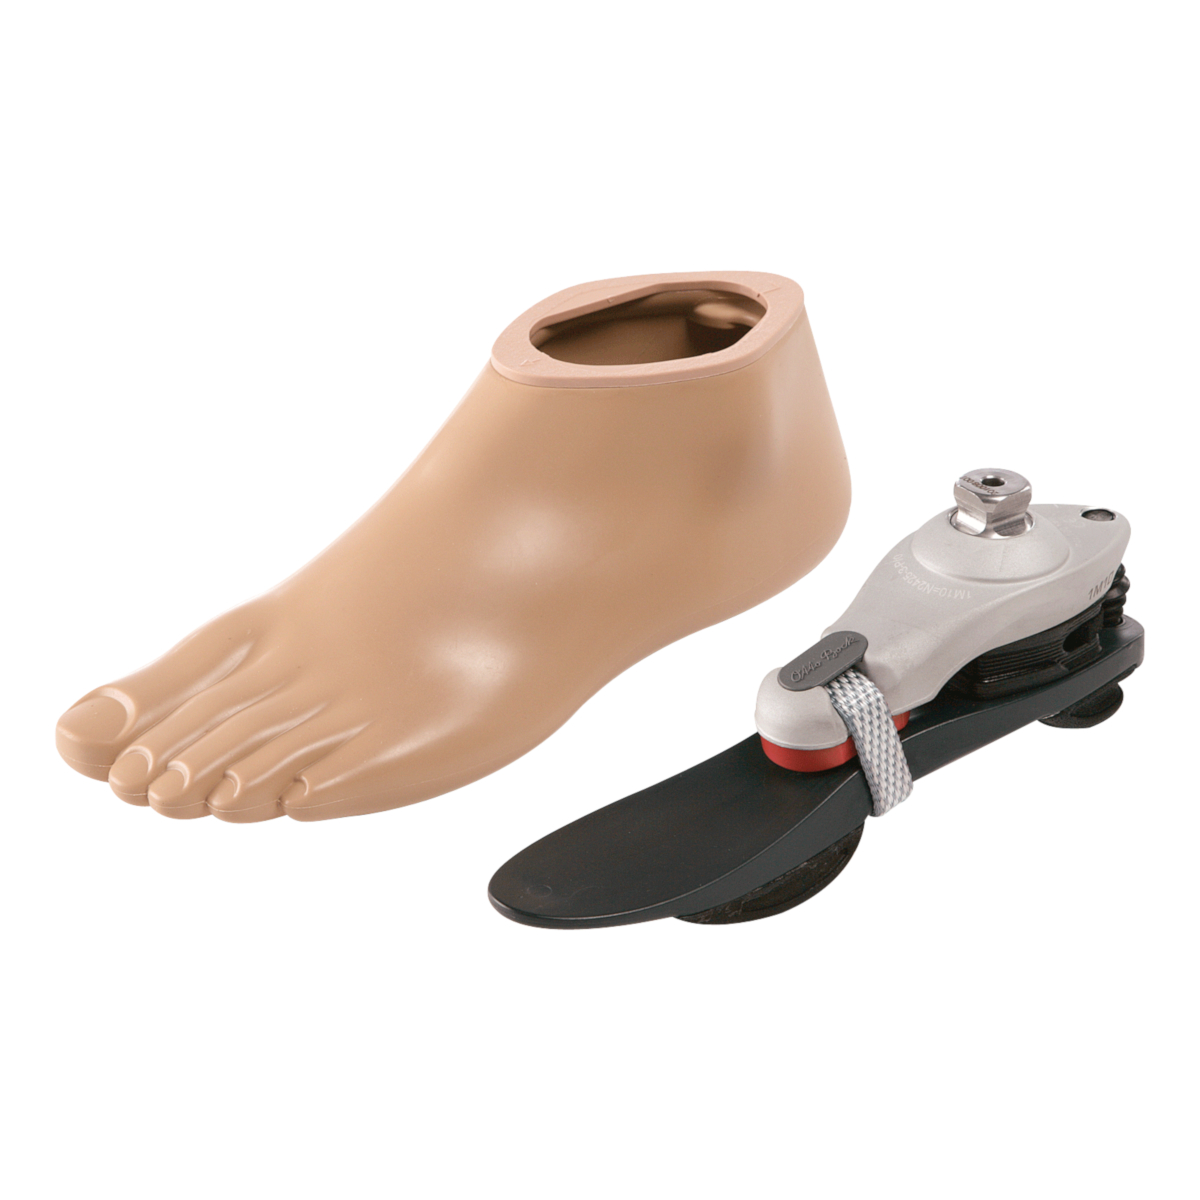 1M10 Adjust incl Footshell | Feet - Mechanical | Lower Limb Prosthetics |  Prosthetics | Ottobock US Shop